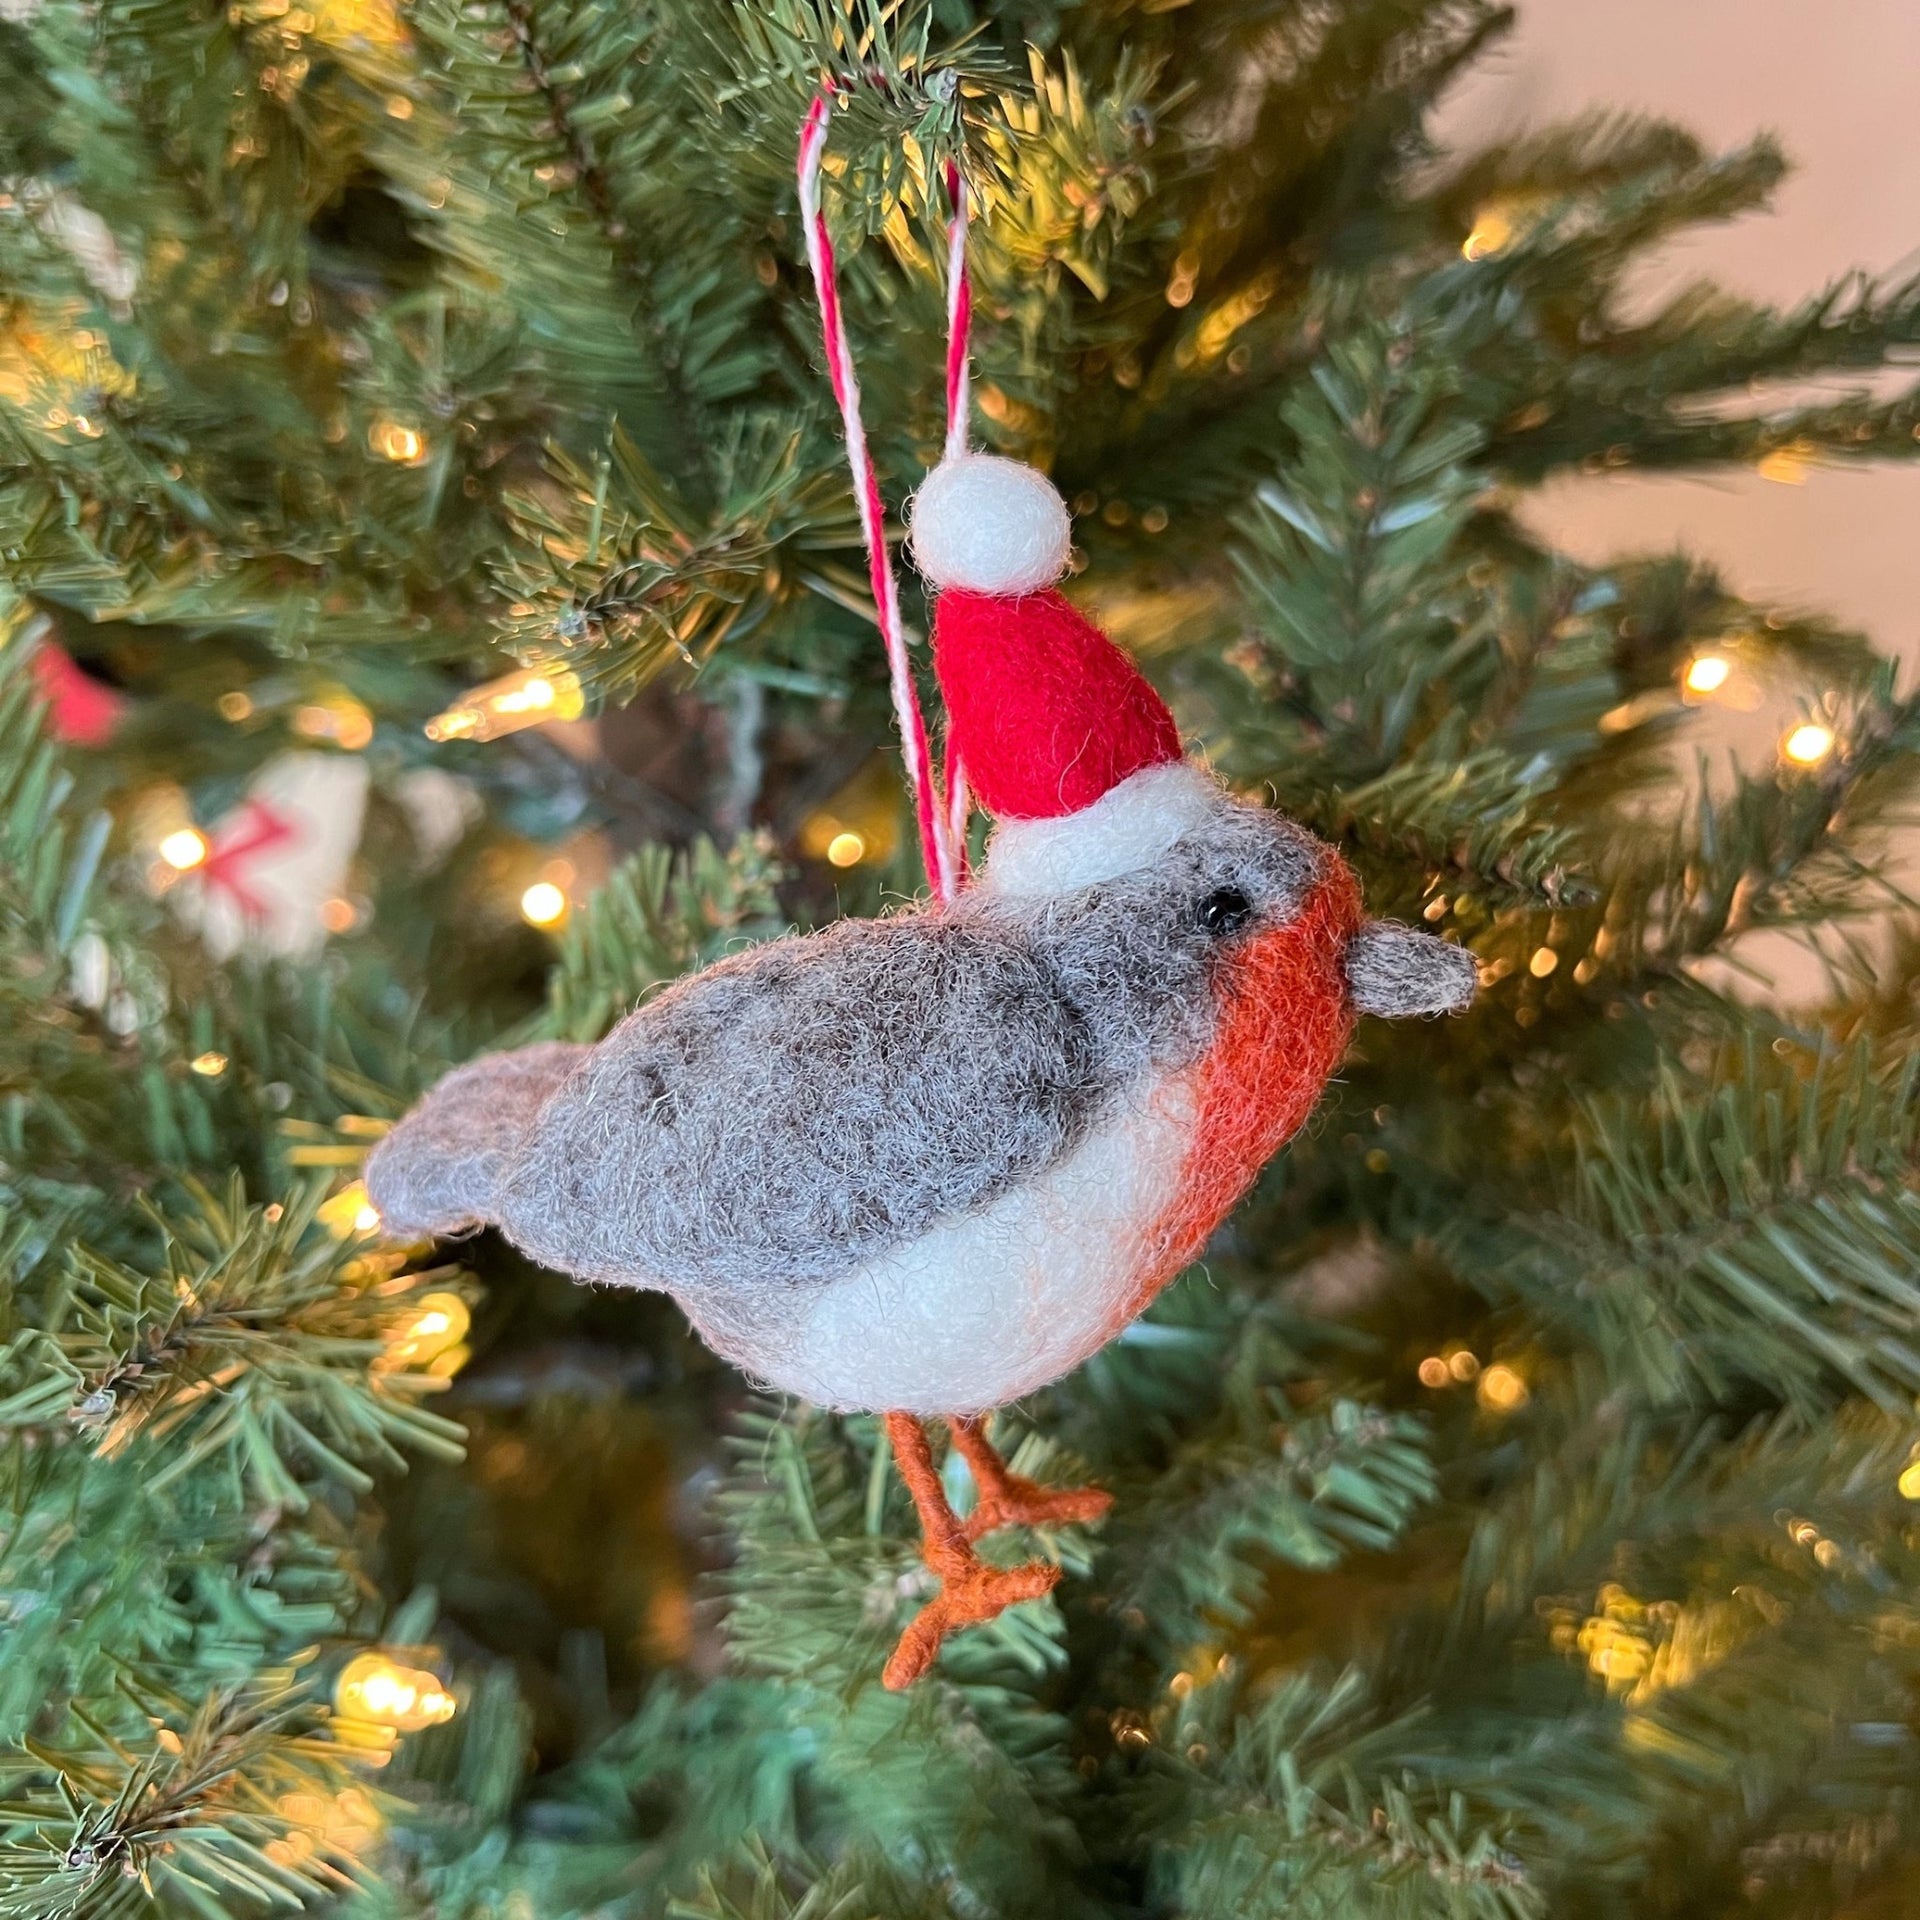 festive felt christmas bird in hat ornament hanging on tree